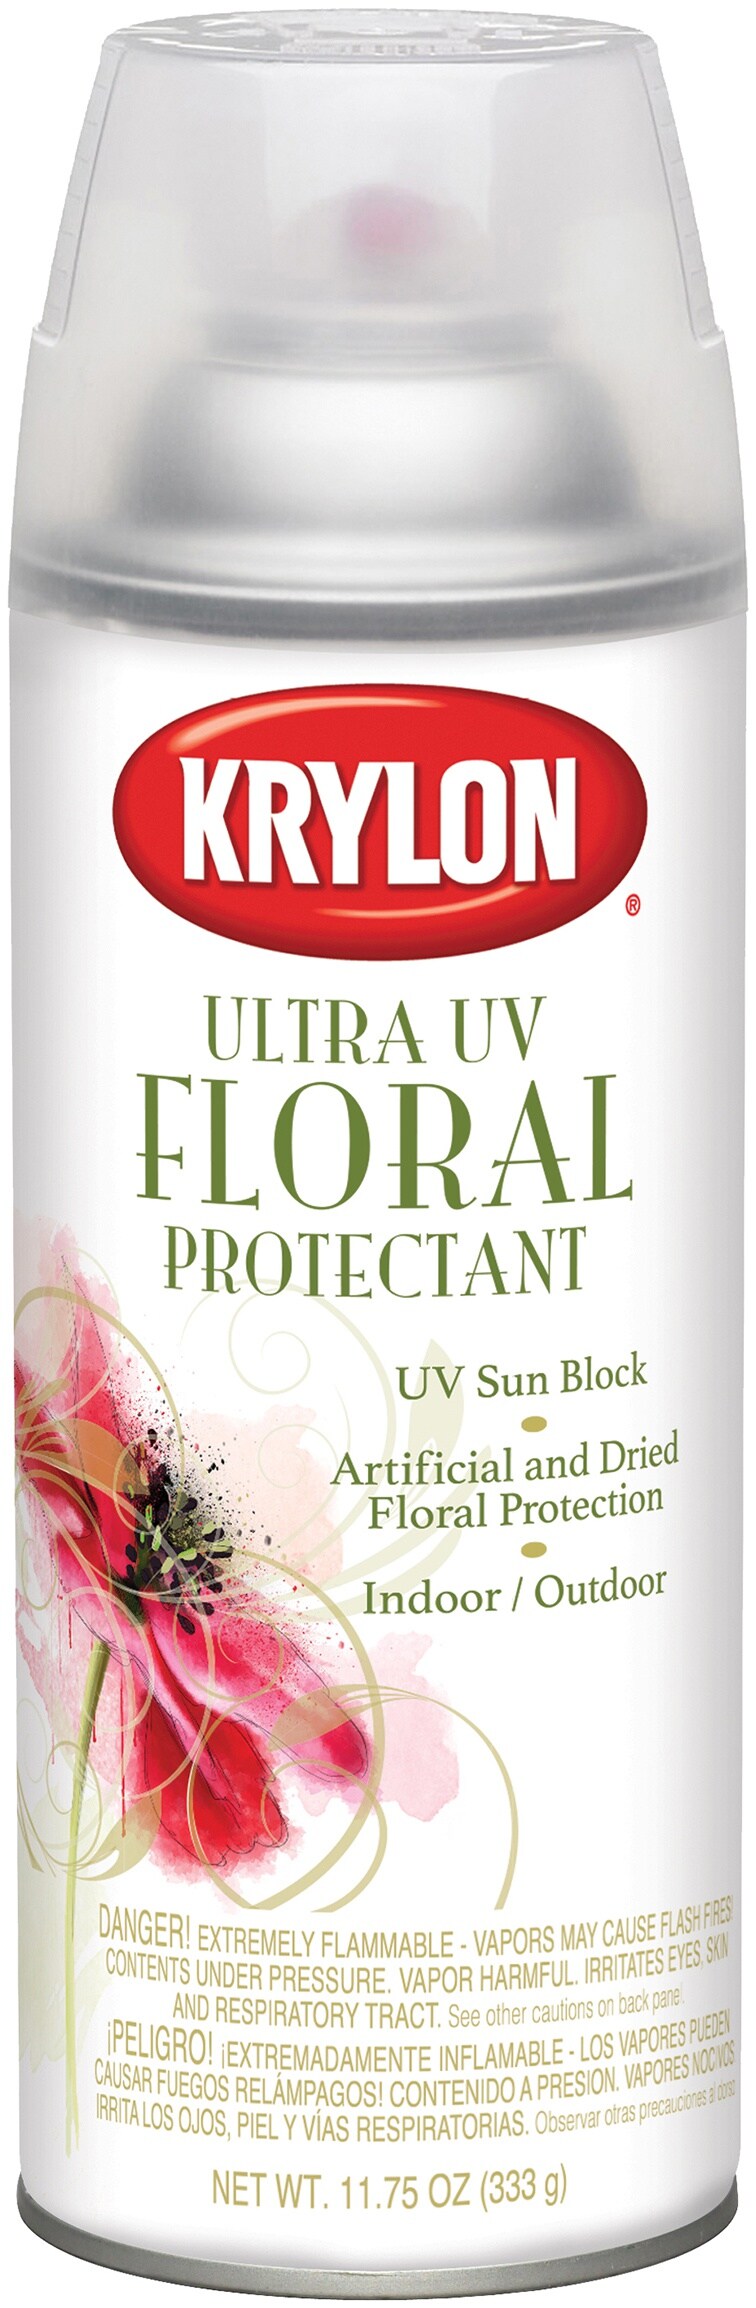 Krylon Ultra UV Floral Protectant 11.75oz